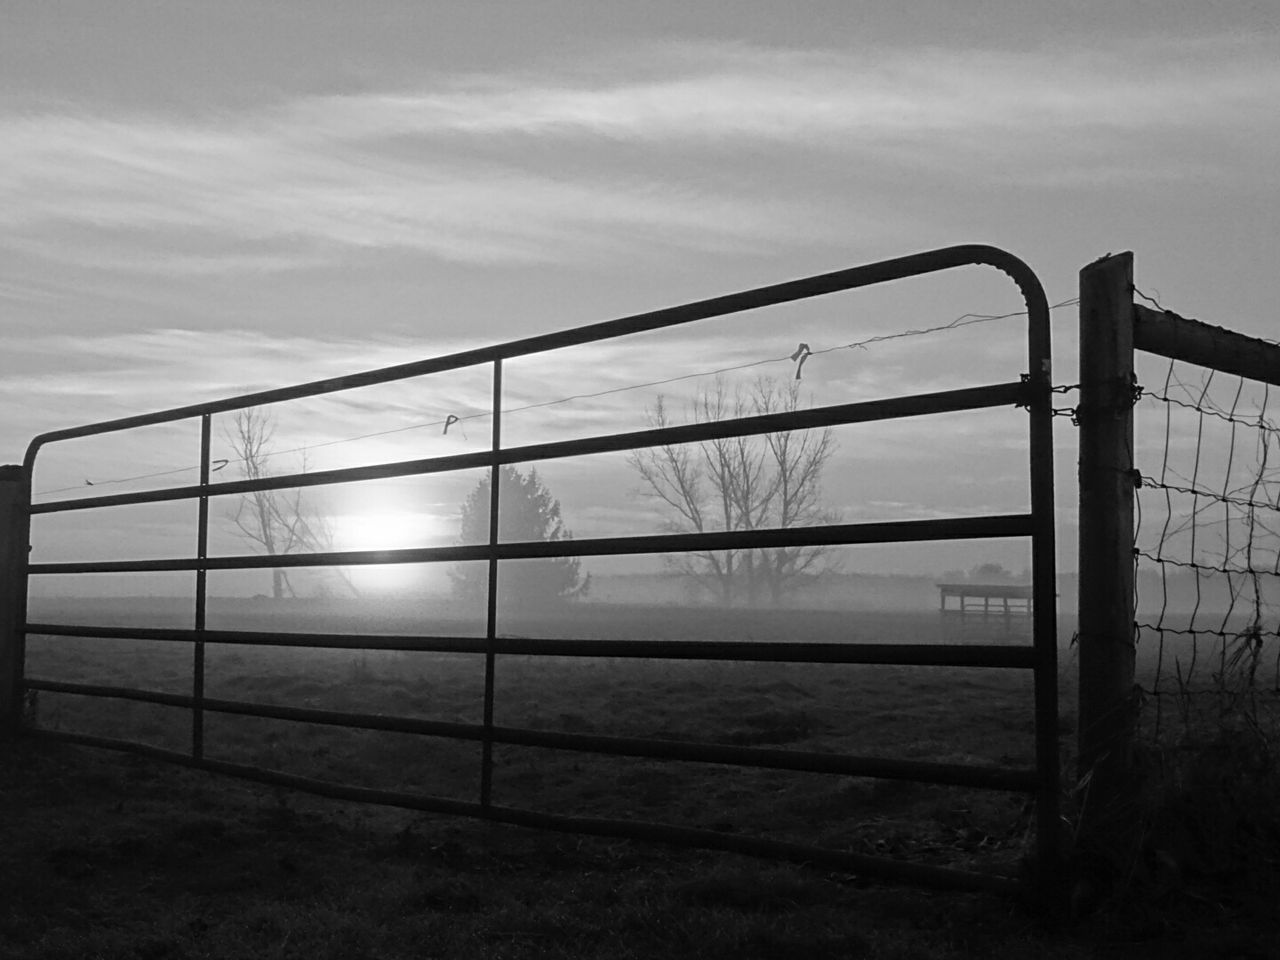 Fence on field against sky during foggy sunrise